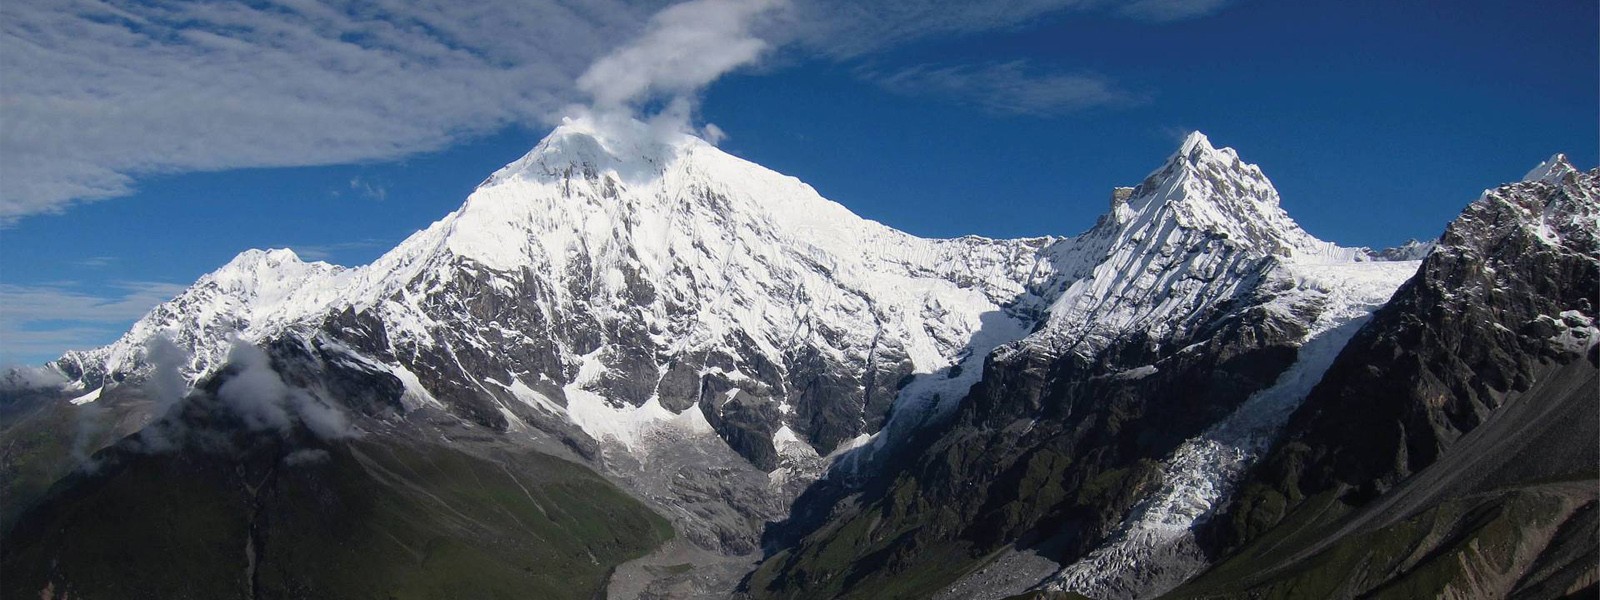 Mt. Langtang Lirung Expedition- Langtang Region, Nepal